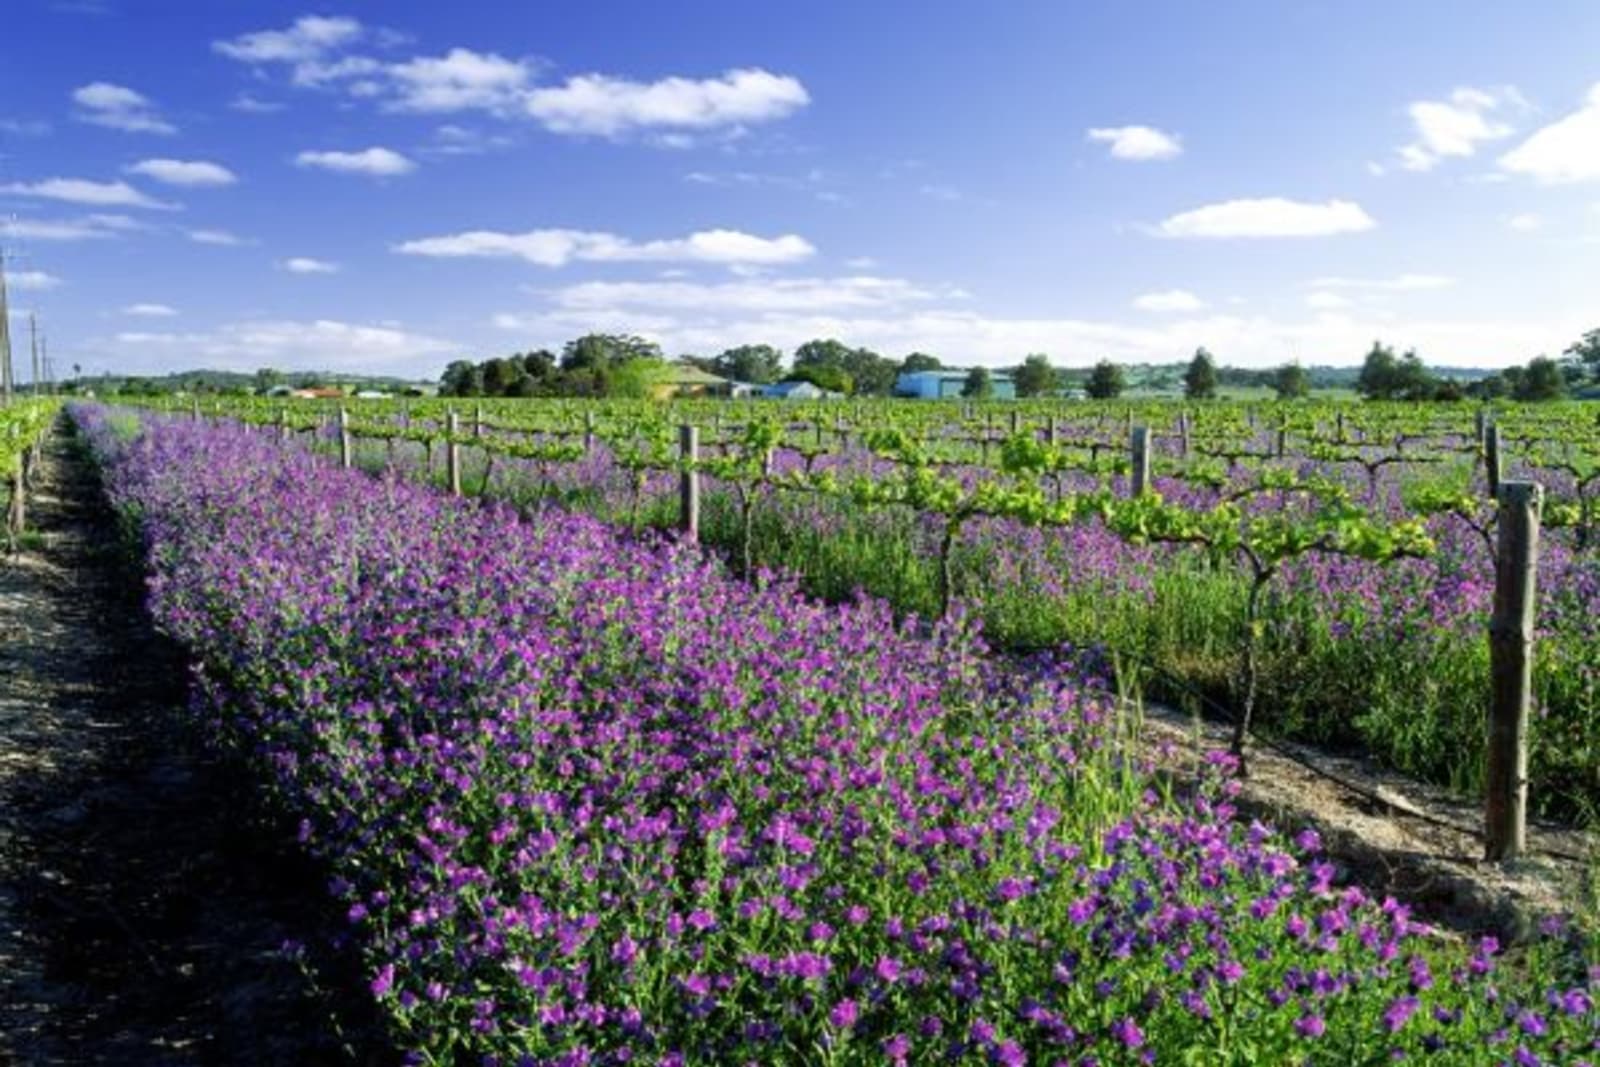 Vineyards with purple flowers